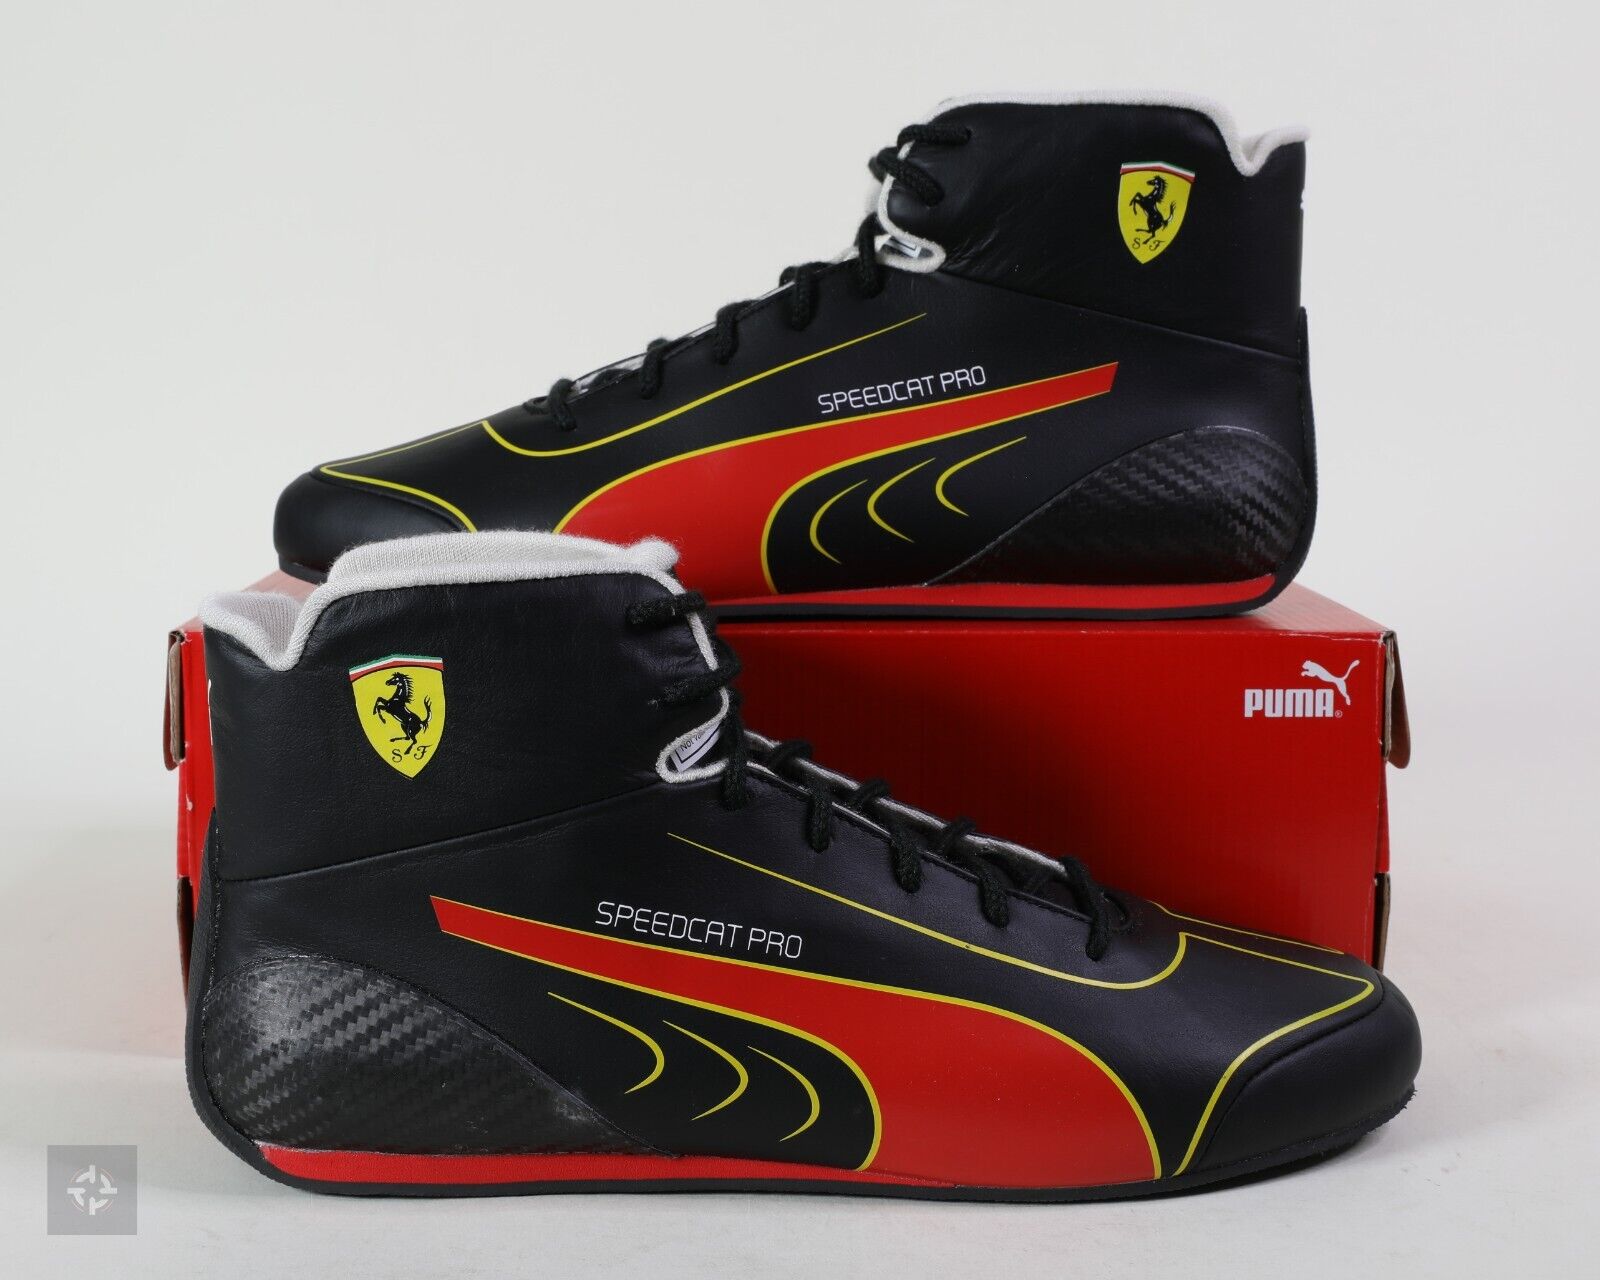 Pre-owned Puma Ferrari Speedcat Pro Sainz F1 Racing Shoes (307934-01) Men's Size 8-11 In Black